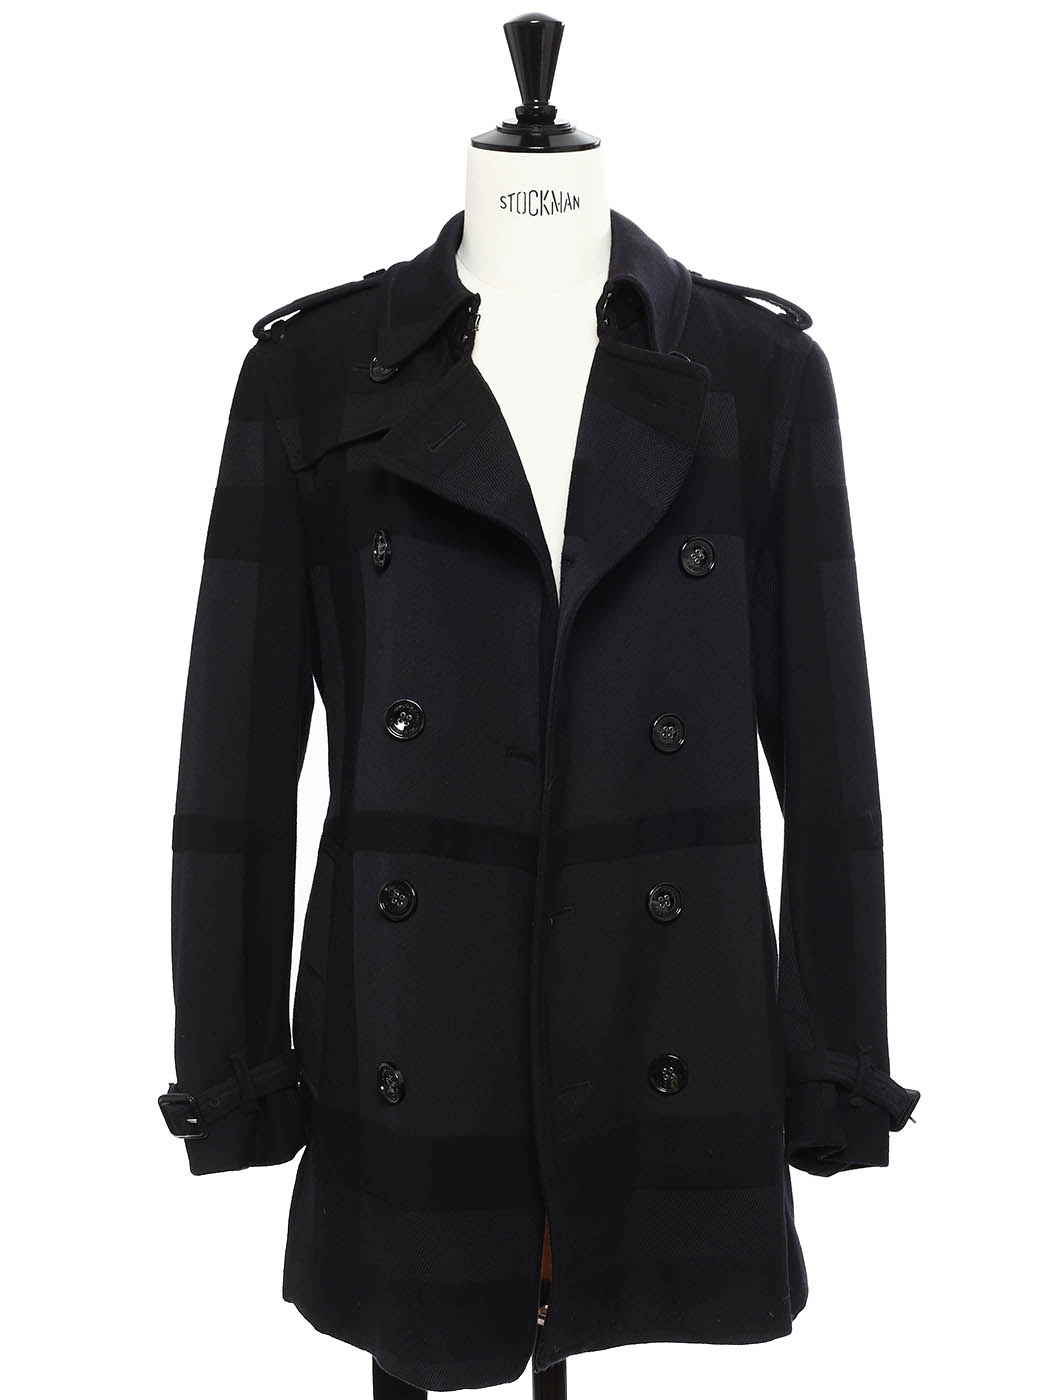 burberry london jacket price